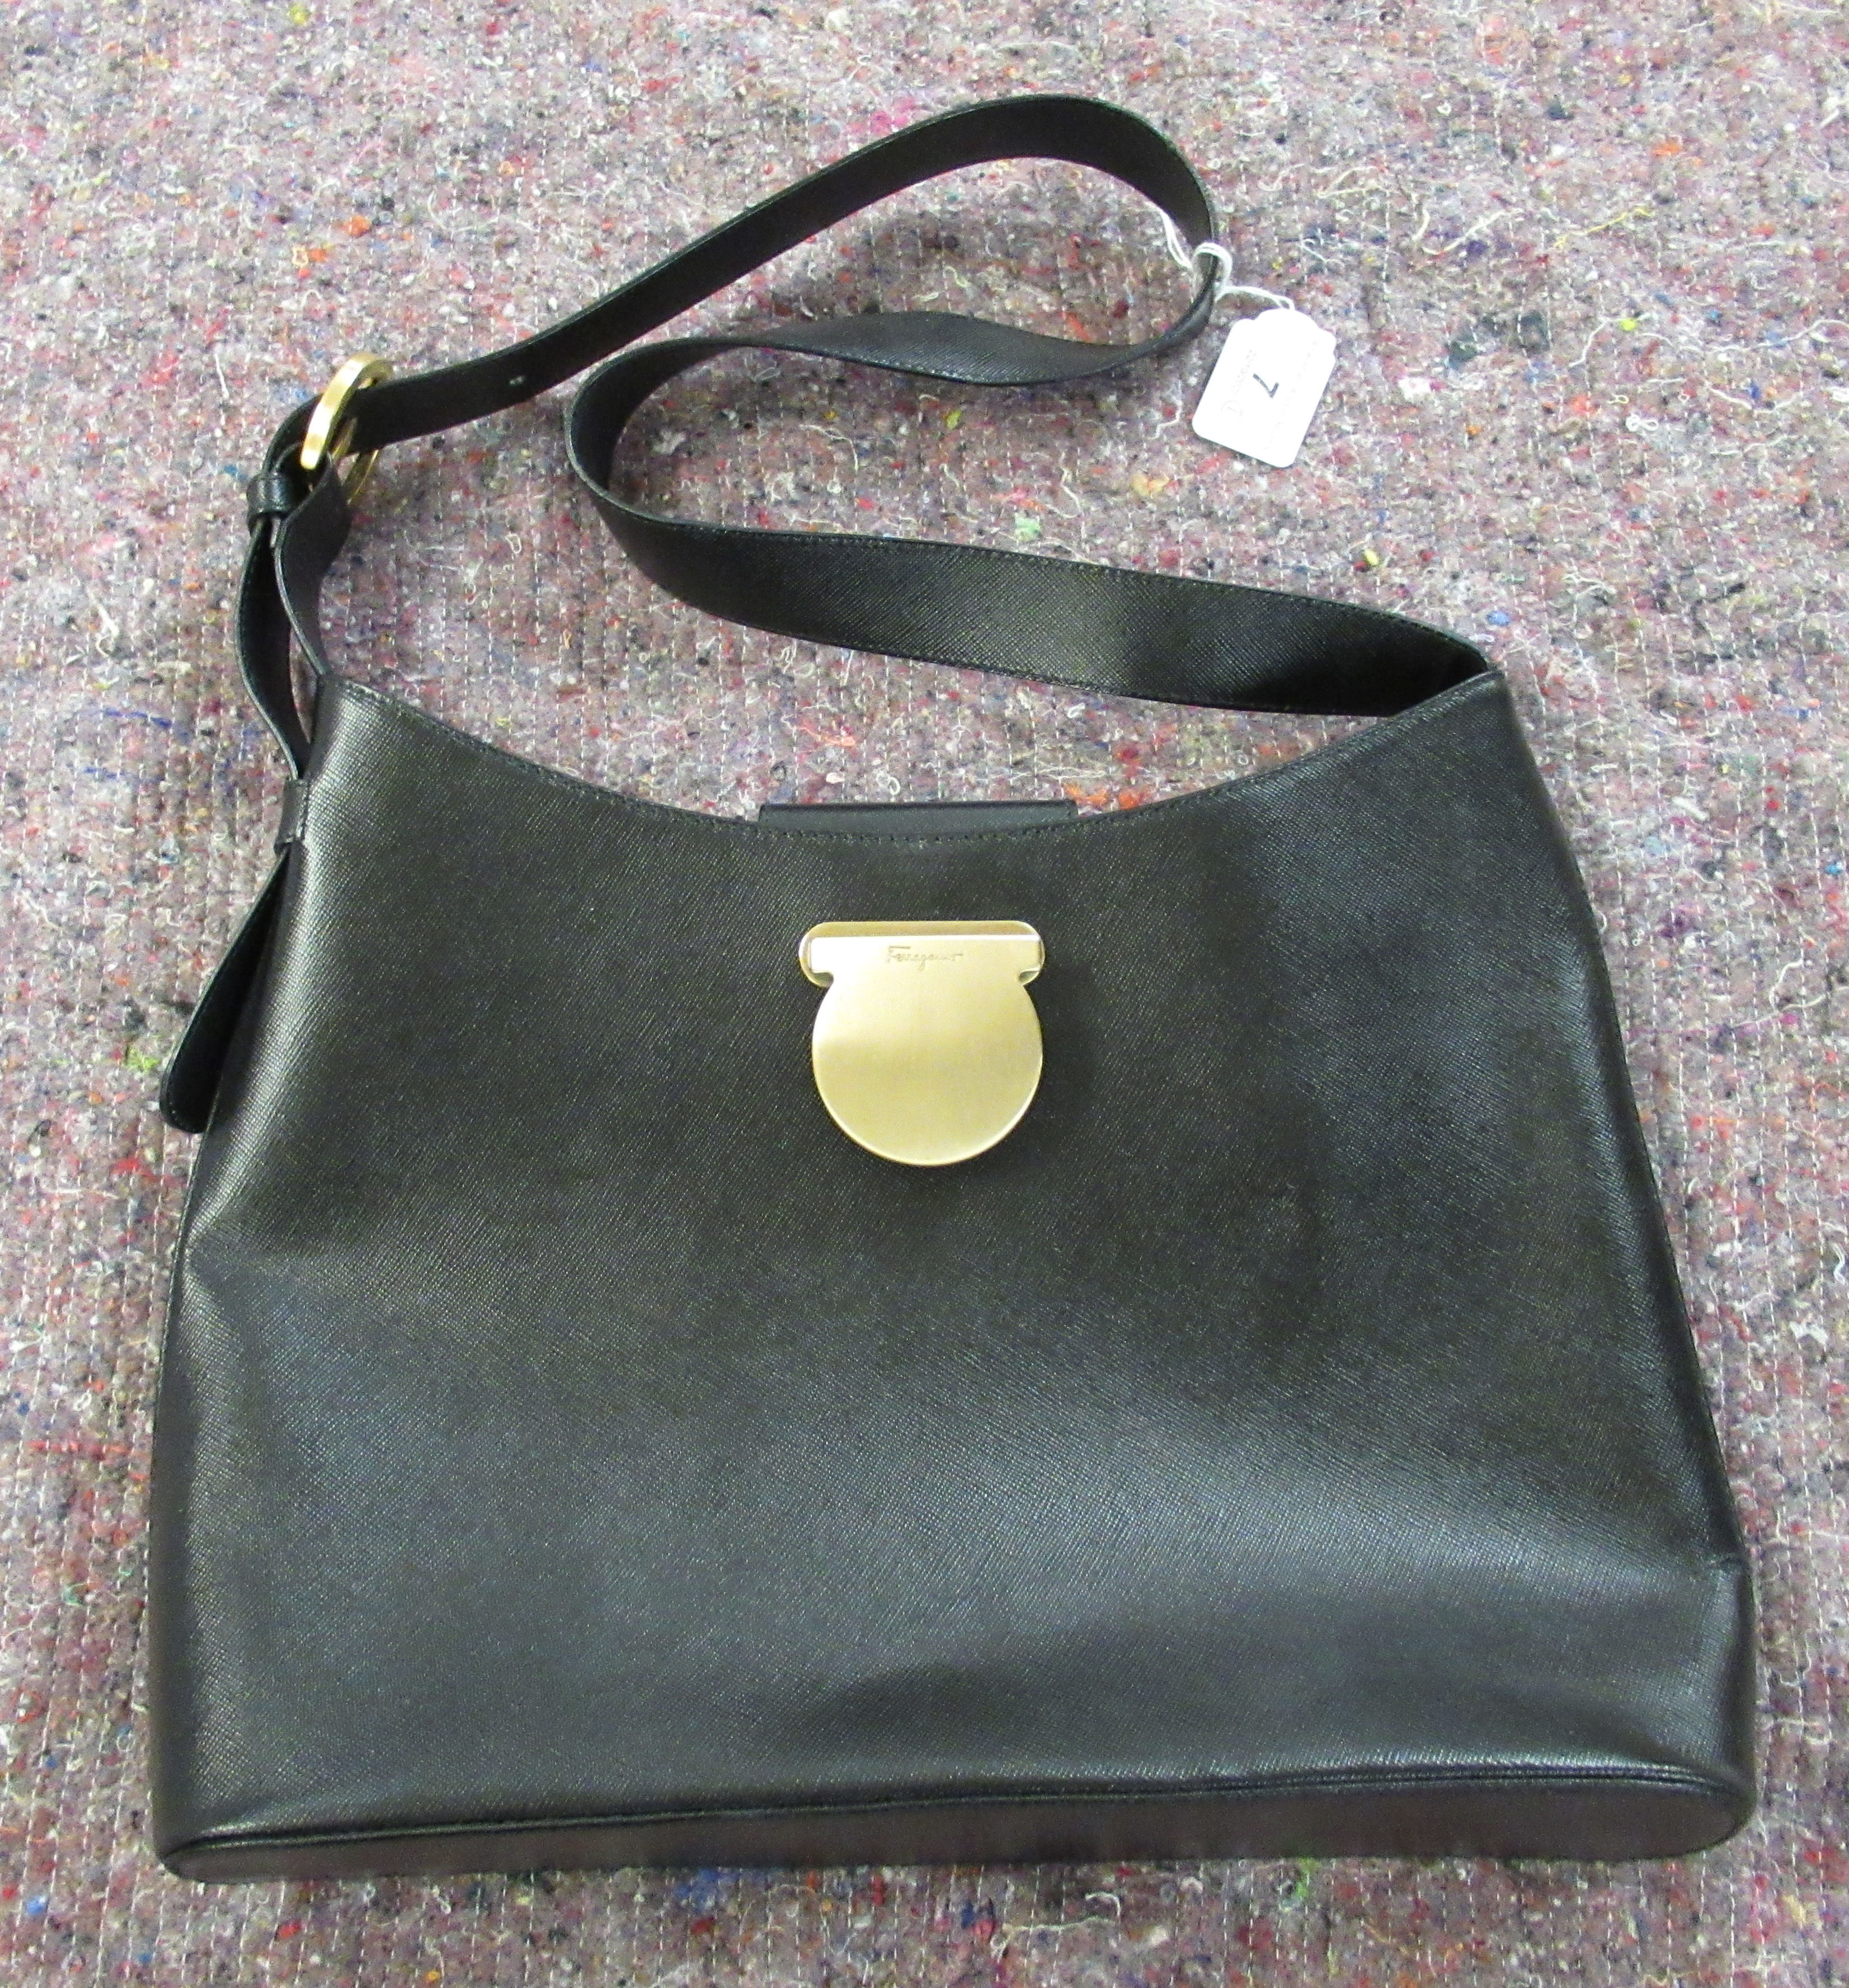 A Salvatore Ferragamo black leather tote bag OS6